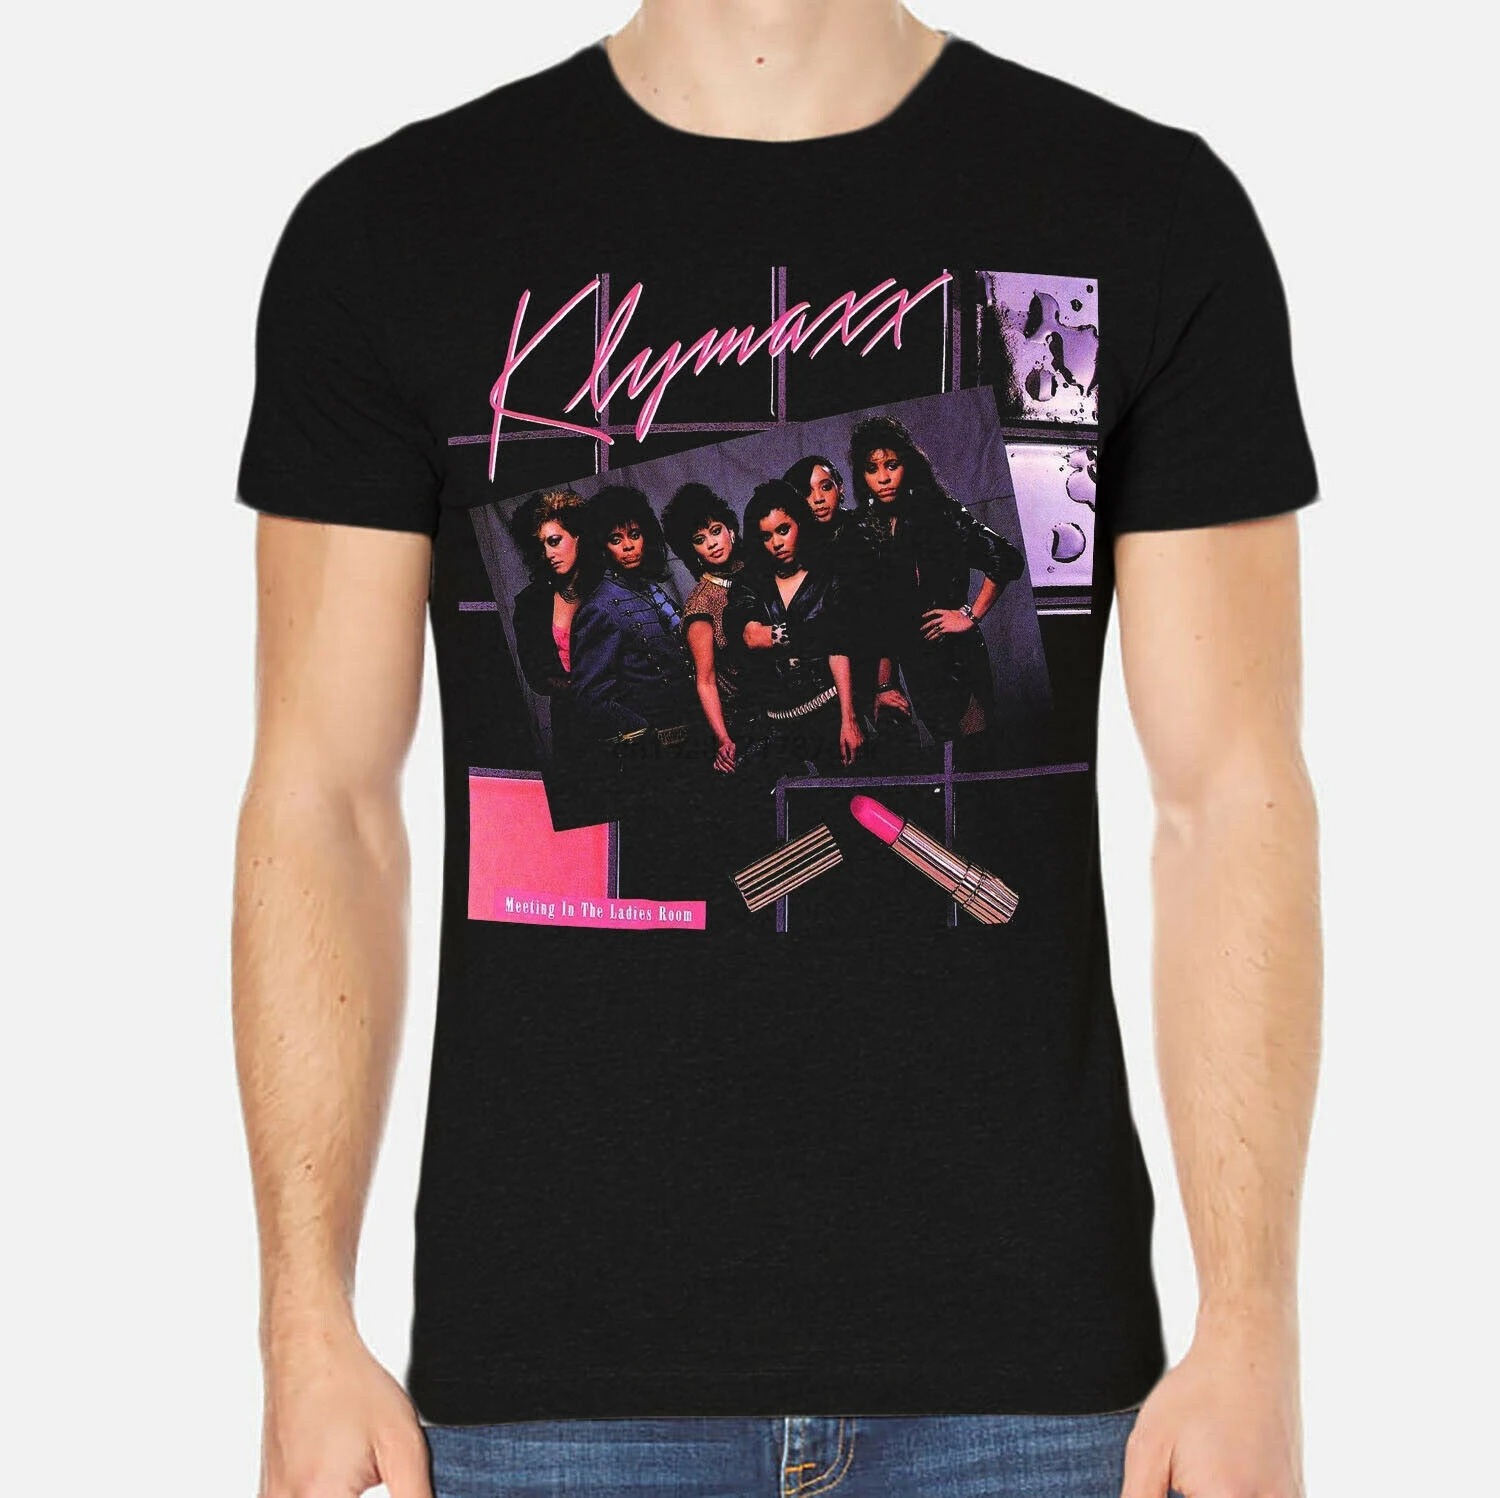 Klymaxx Men T Shirt Black Clothing 1 A 390|T-Shirts| - AliExpress